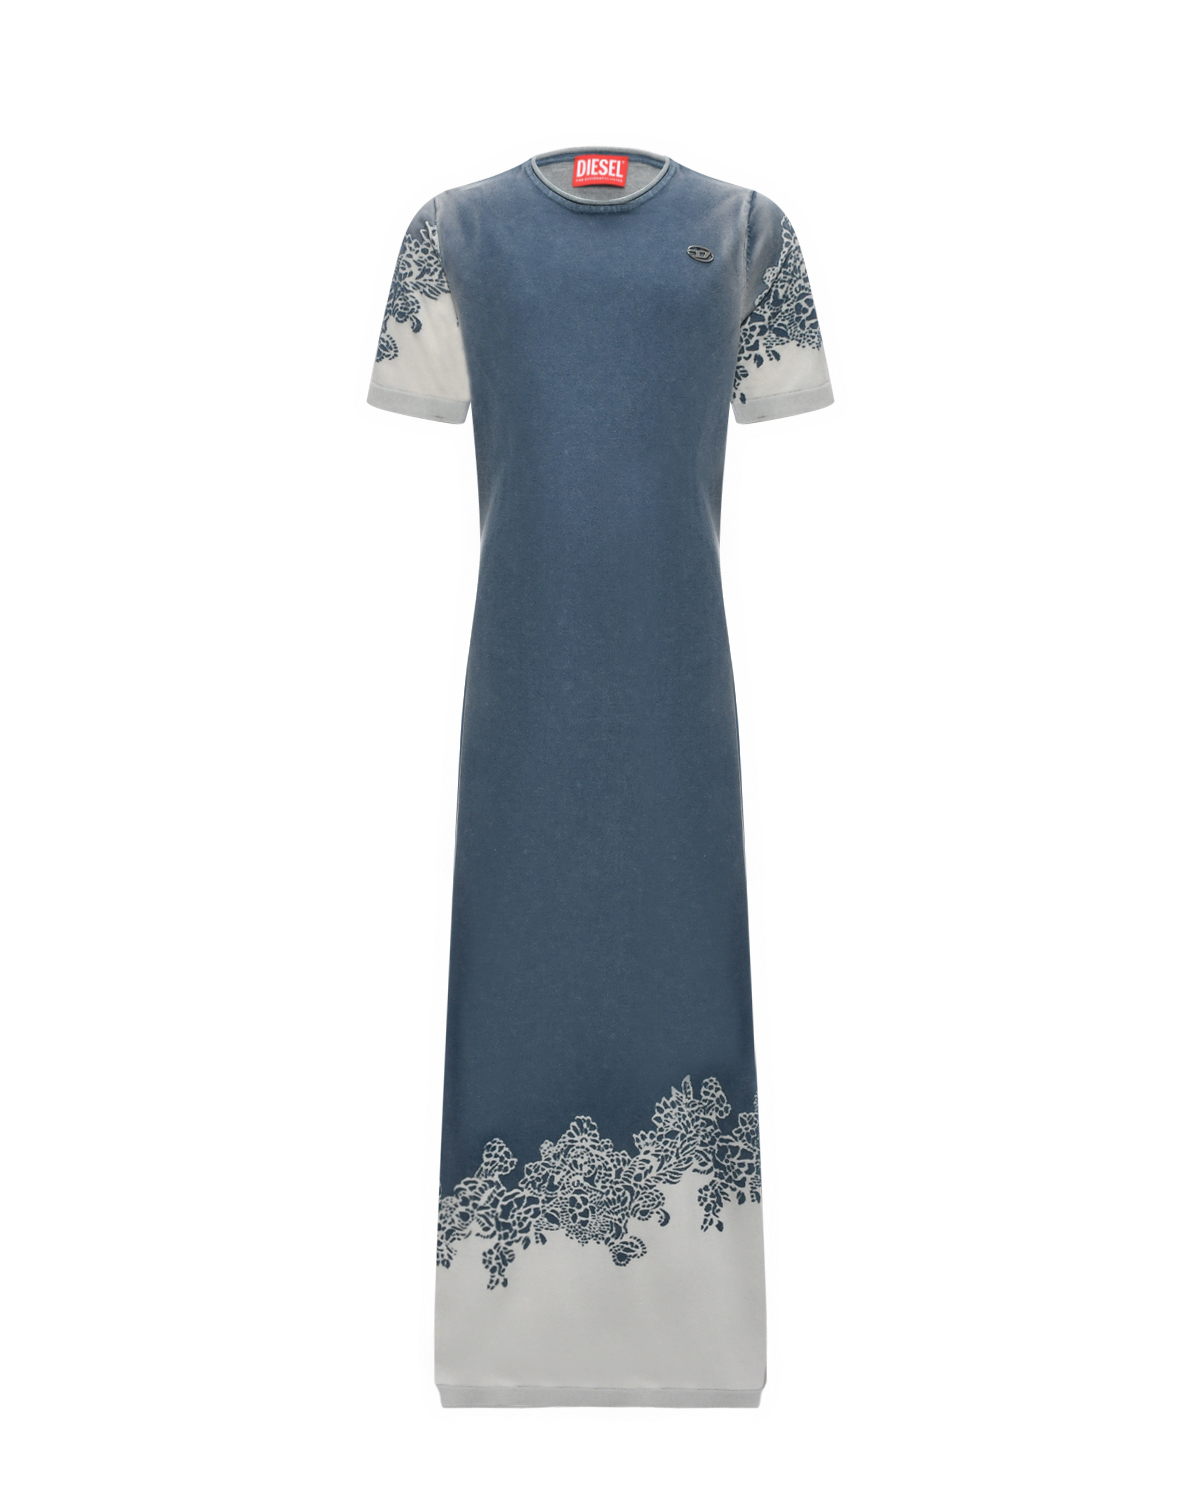 Платье с короткими рукавами Diesel, размер 152, цвет синий - фото 1